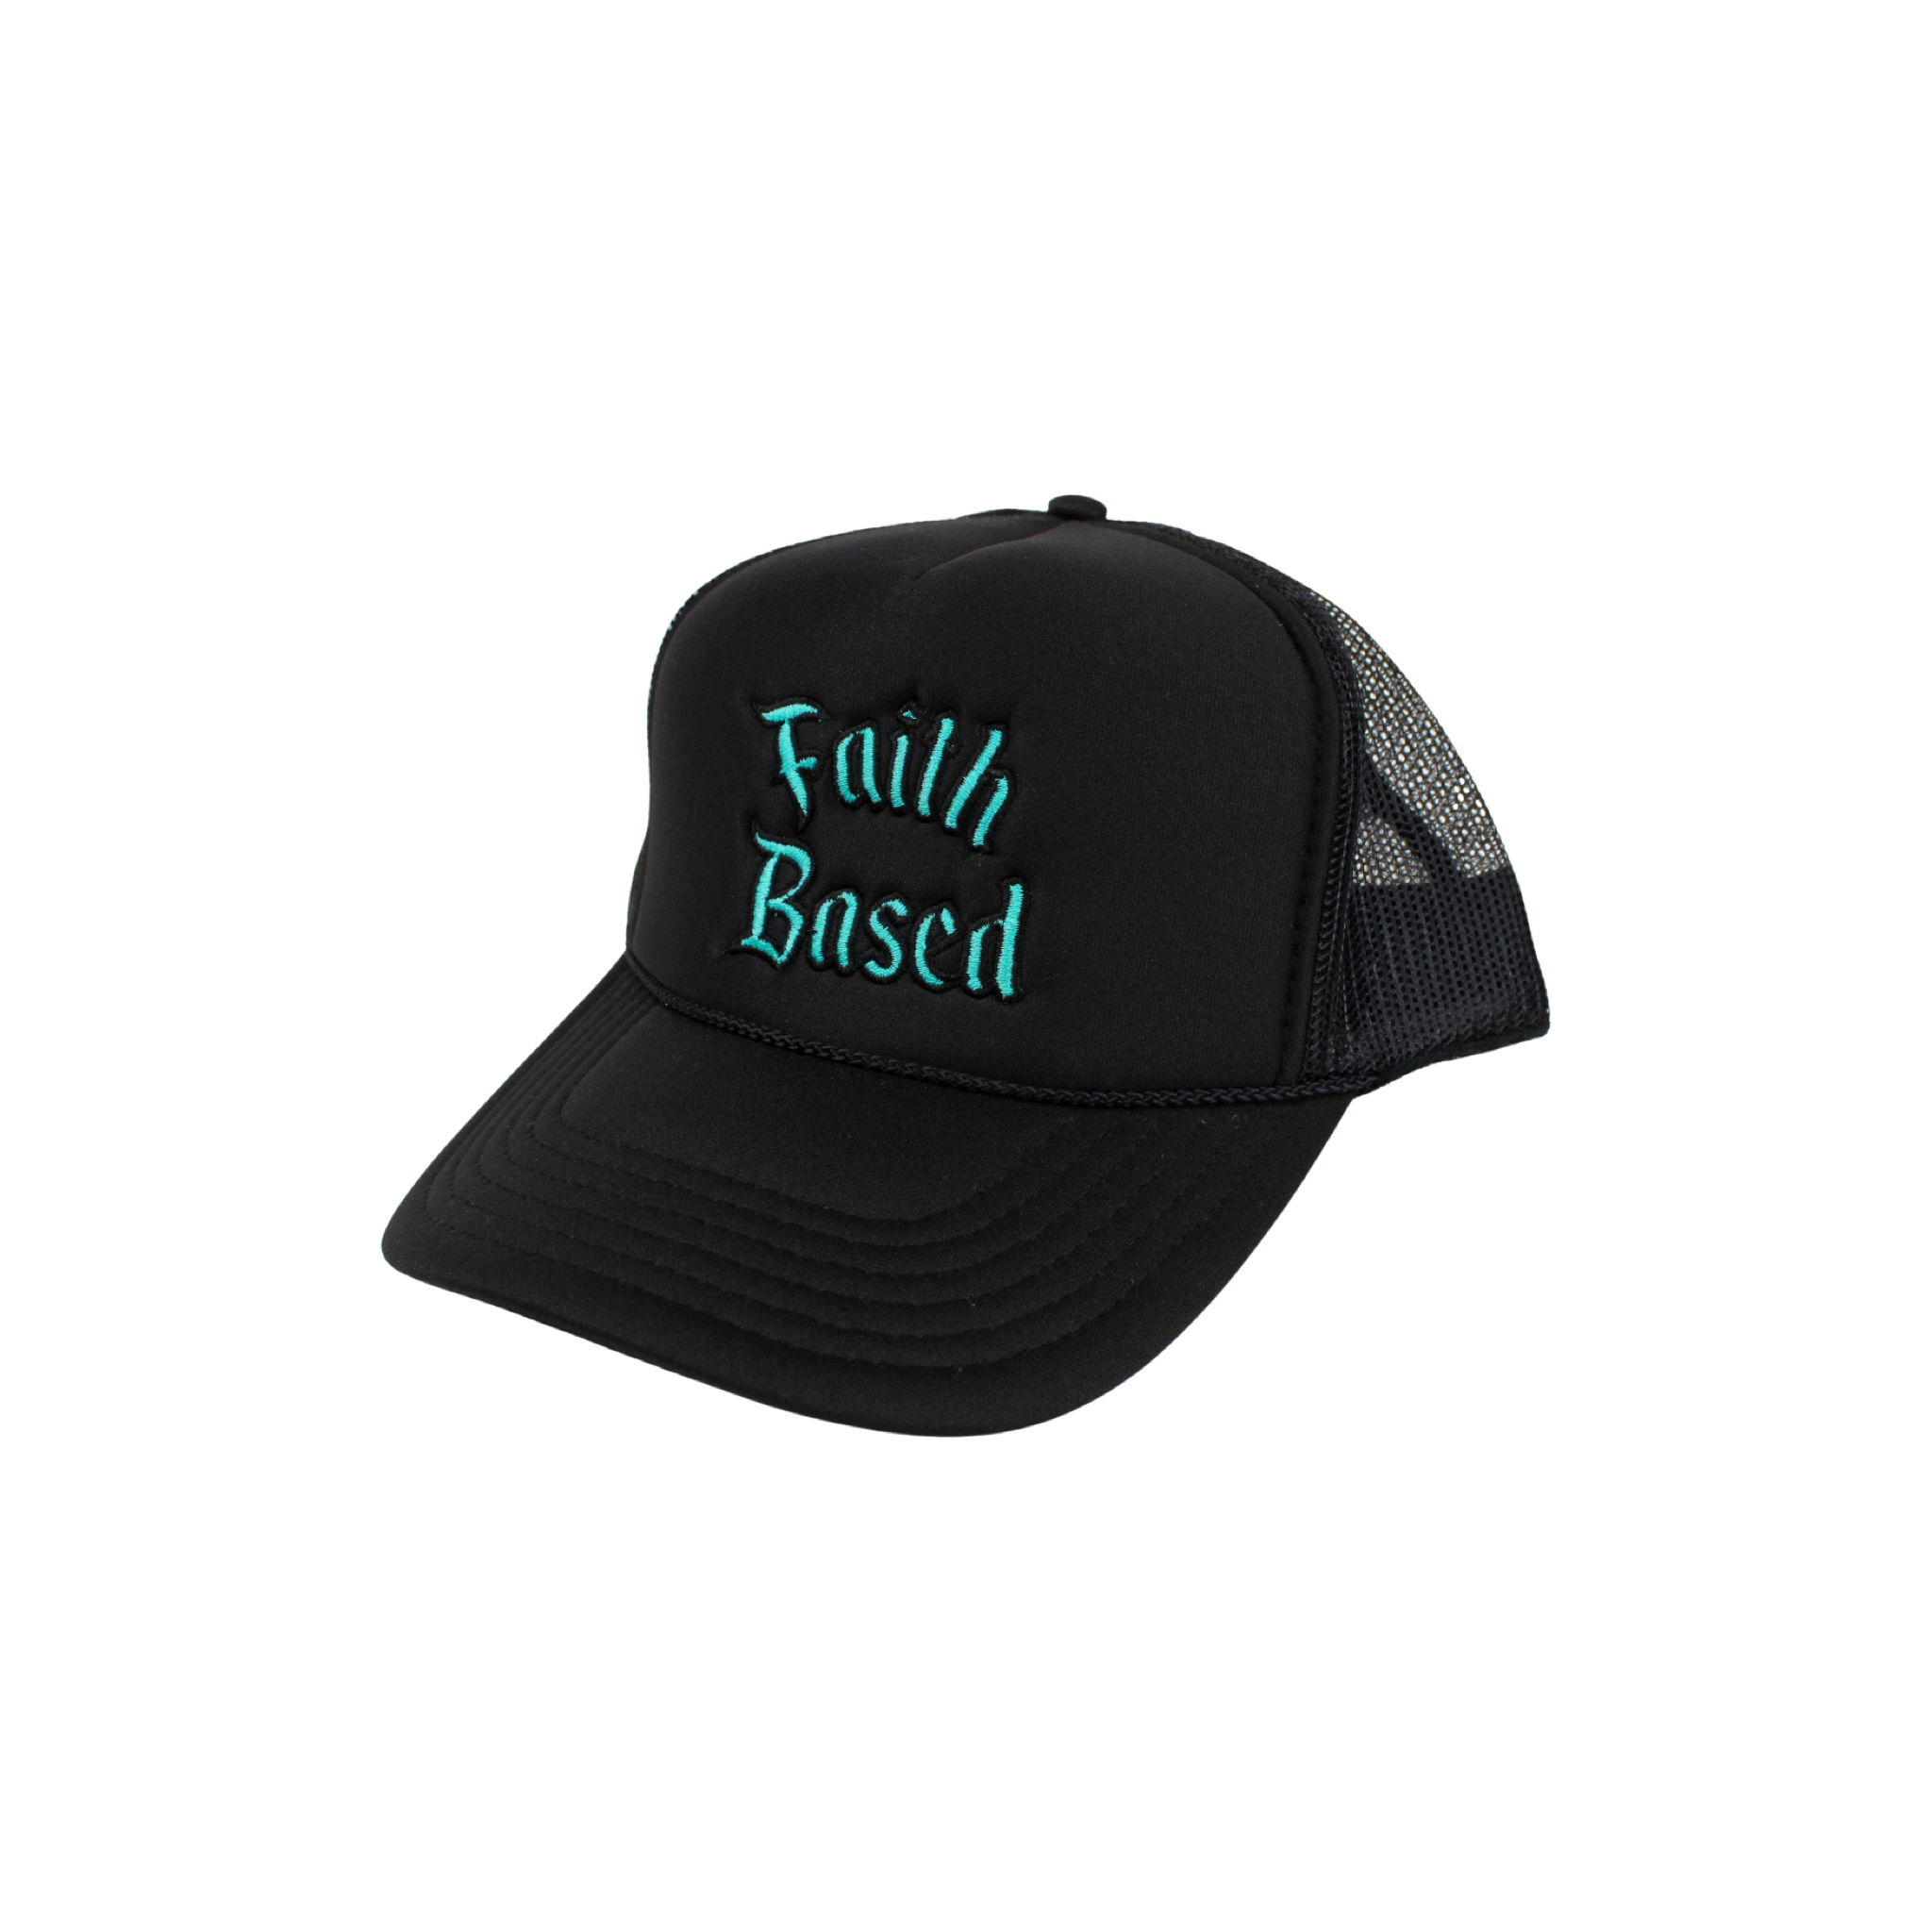 "Faith Based" Trucker Hat